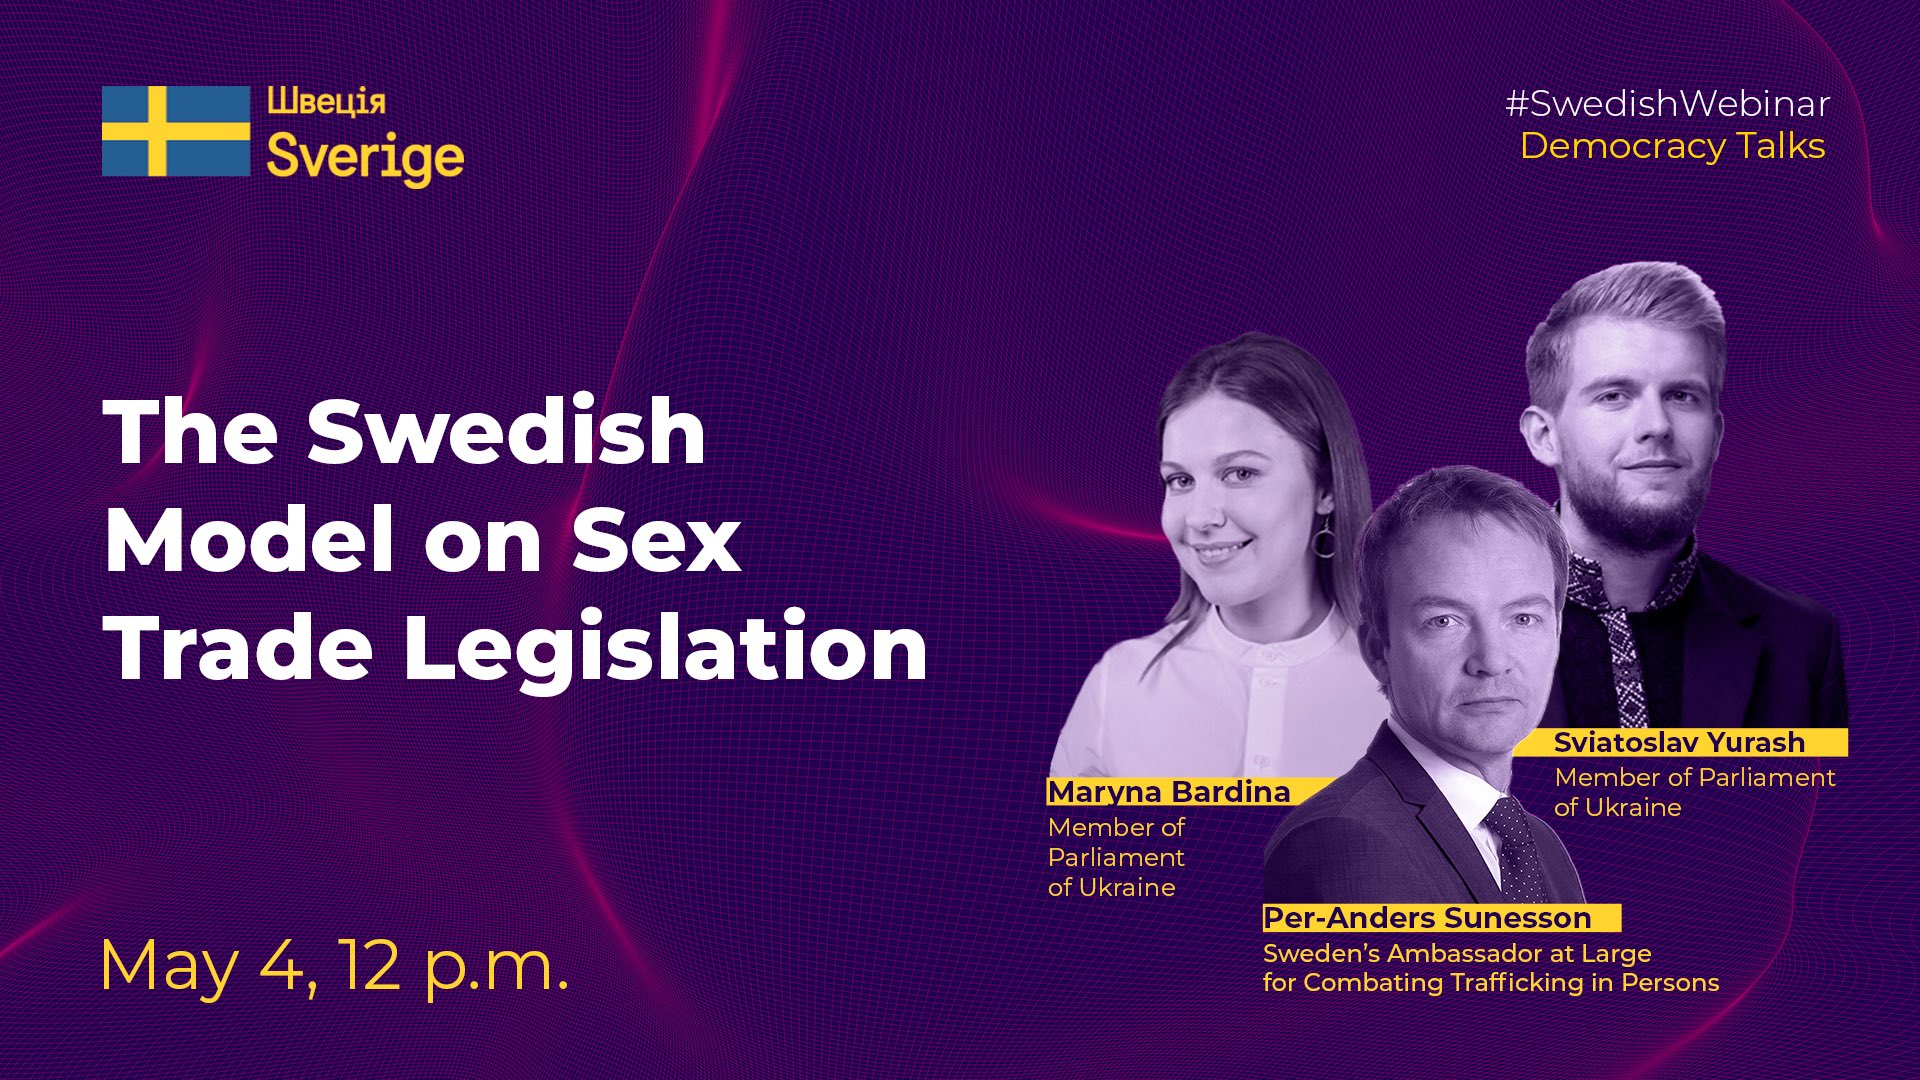 Sweden In Ukraine On Twitter Join Our Webinar On The Swedish Model On Sex Trade Legislation Starting In 15 Minutes Watch The Webinar In Ukrainian Https T Co Qslrx2zfde English Https T Co Zg0zastoms